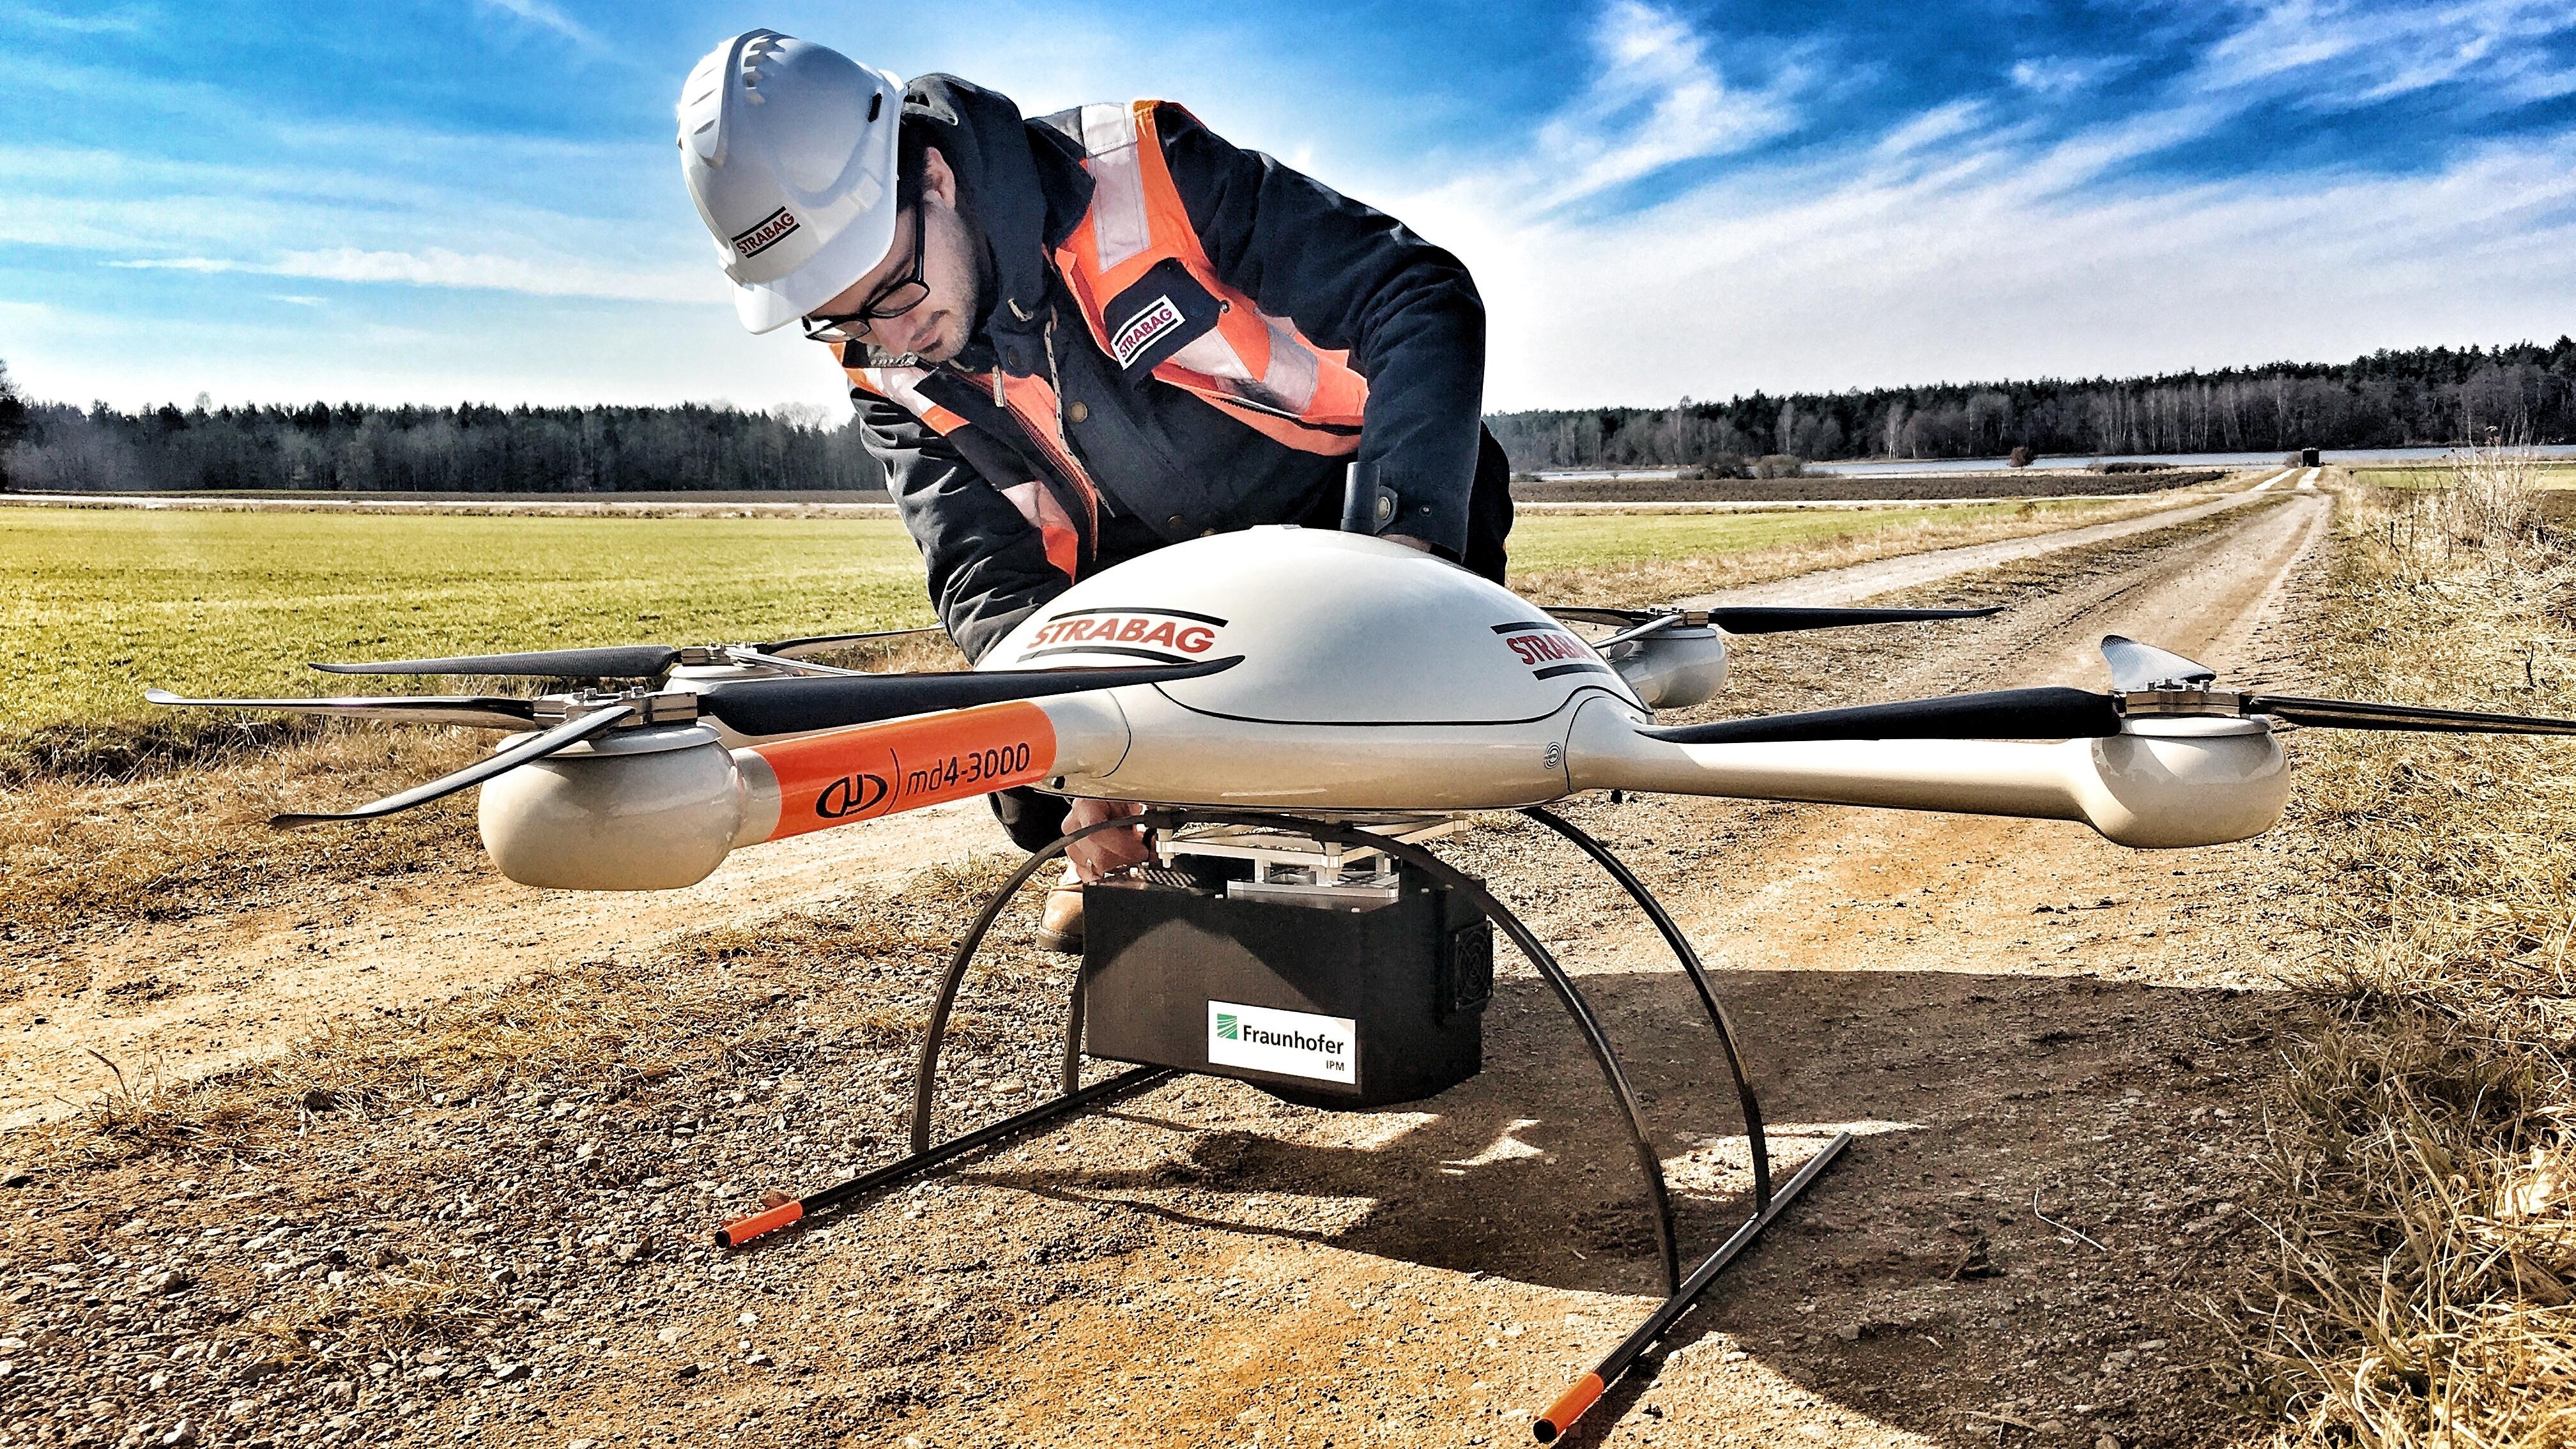 Strabag surveyor using Strabag drones